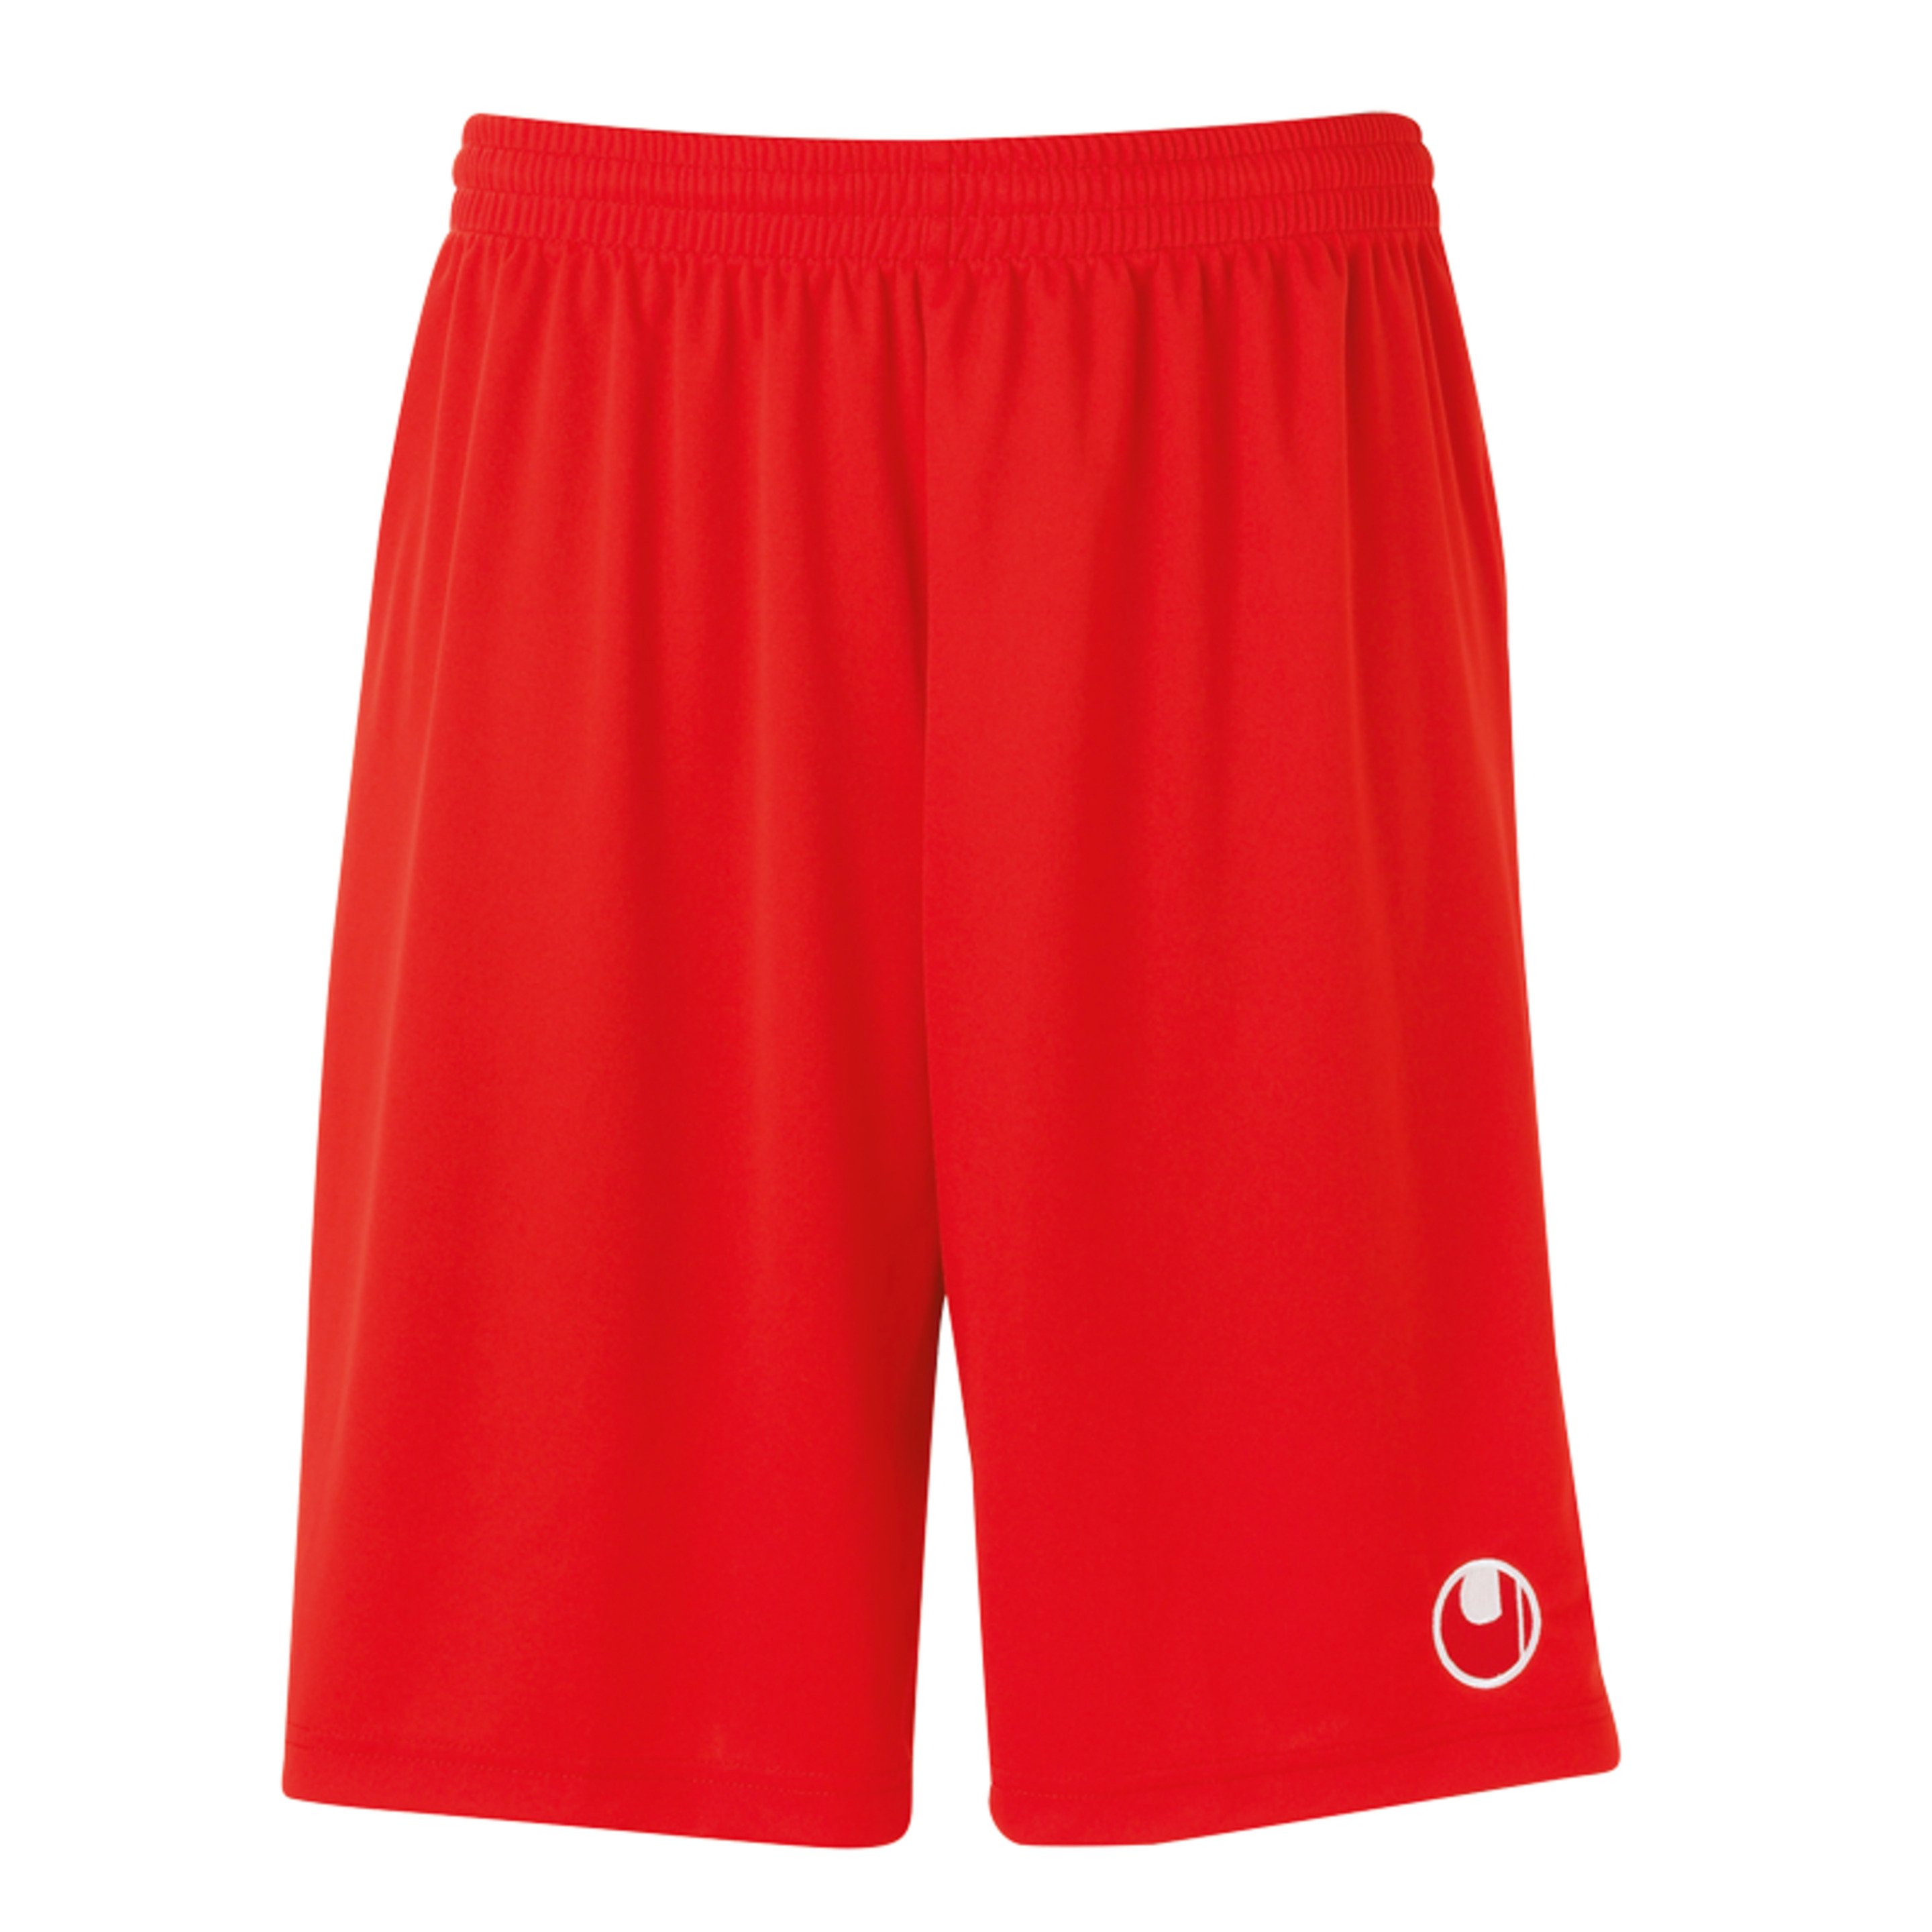 Center Ii Shorts With Slip Inside Rojo Uhlsport - rojo - 